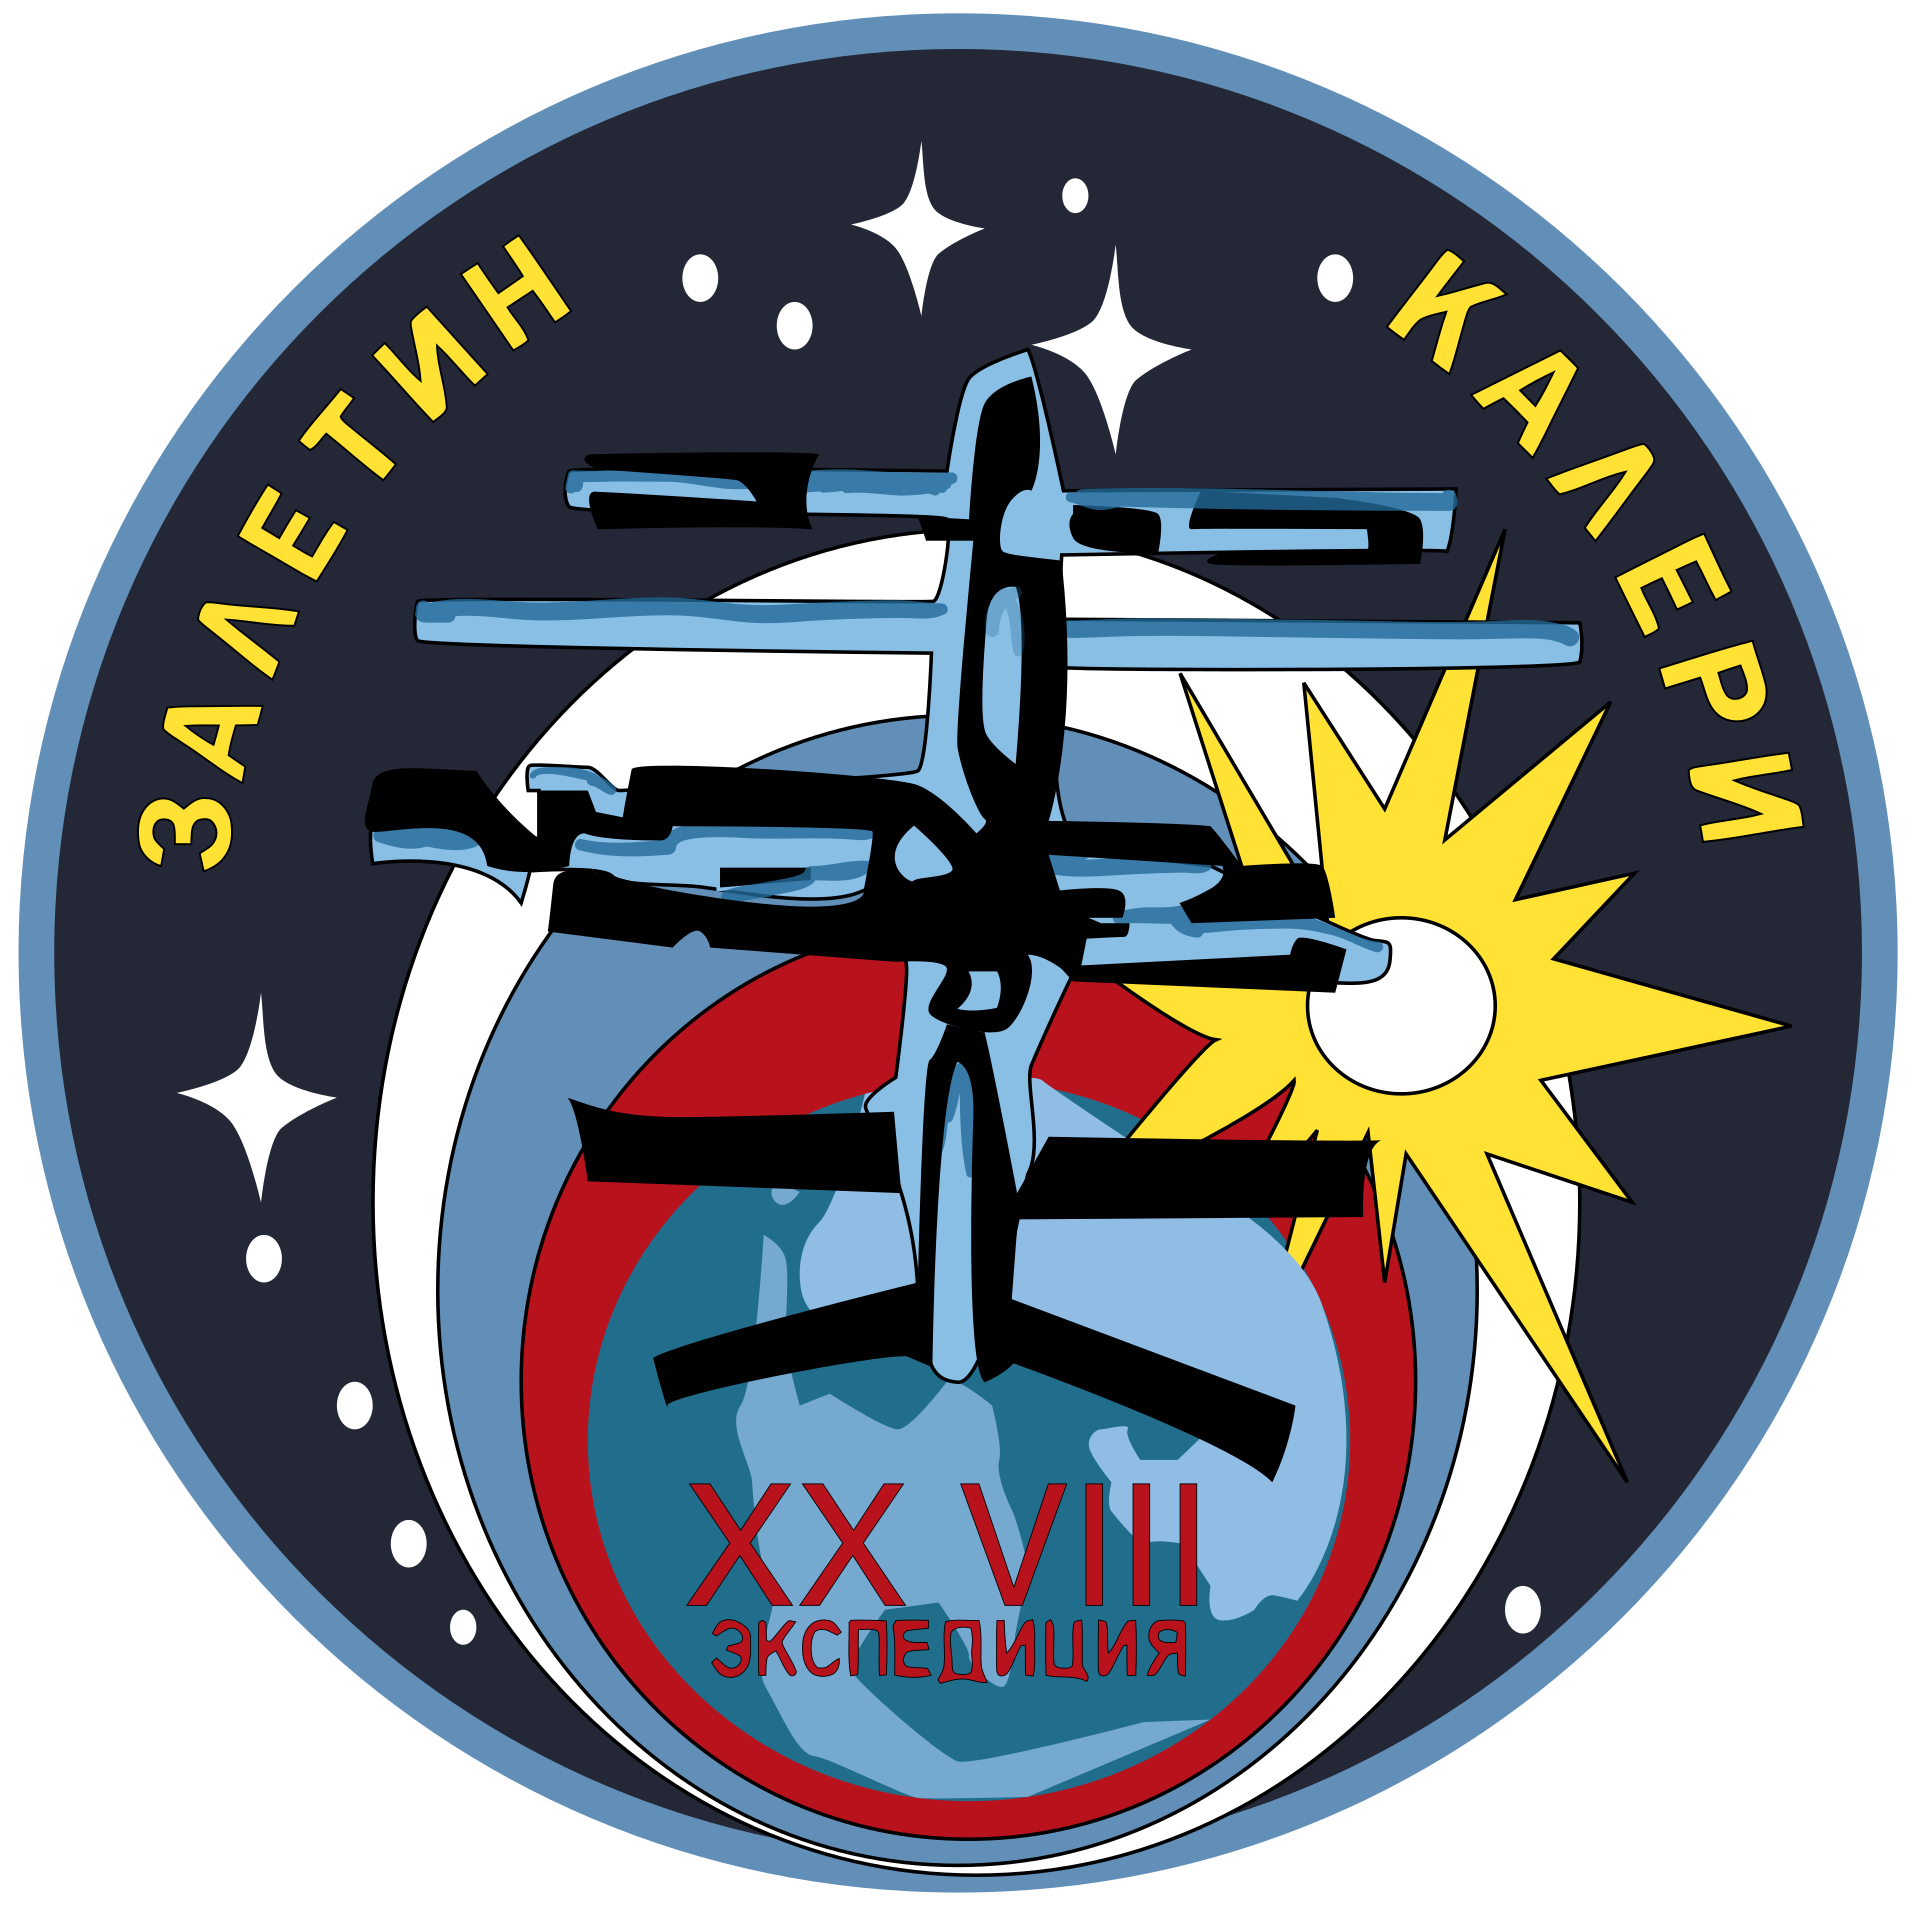 Mission patch for Soyuz TM-30